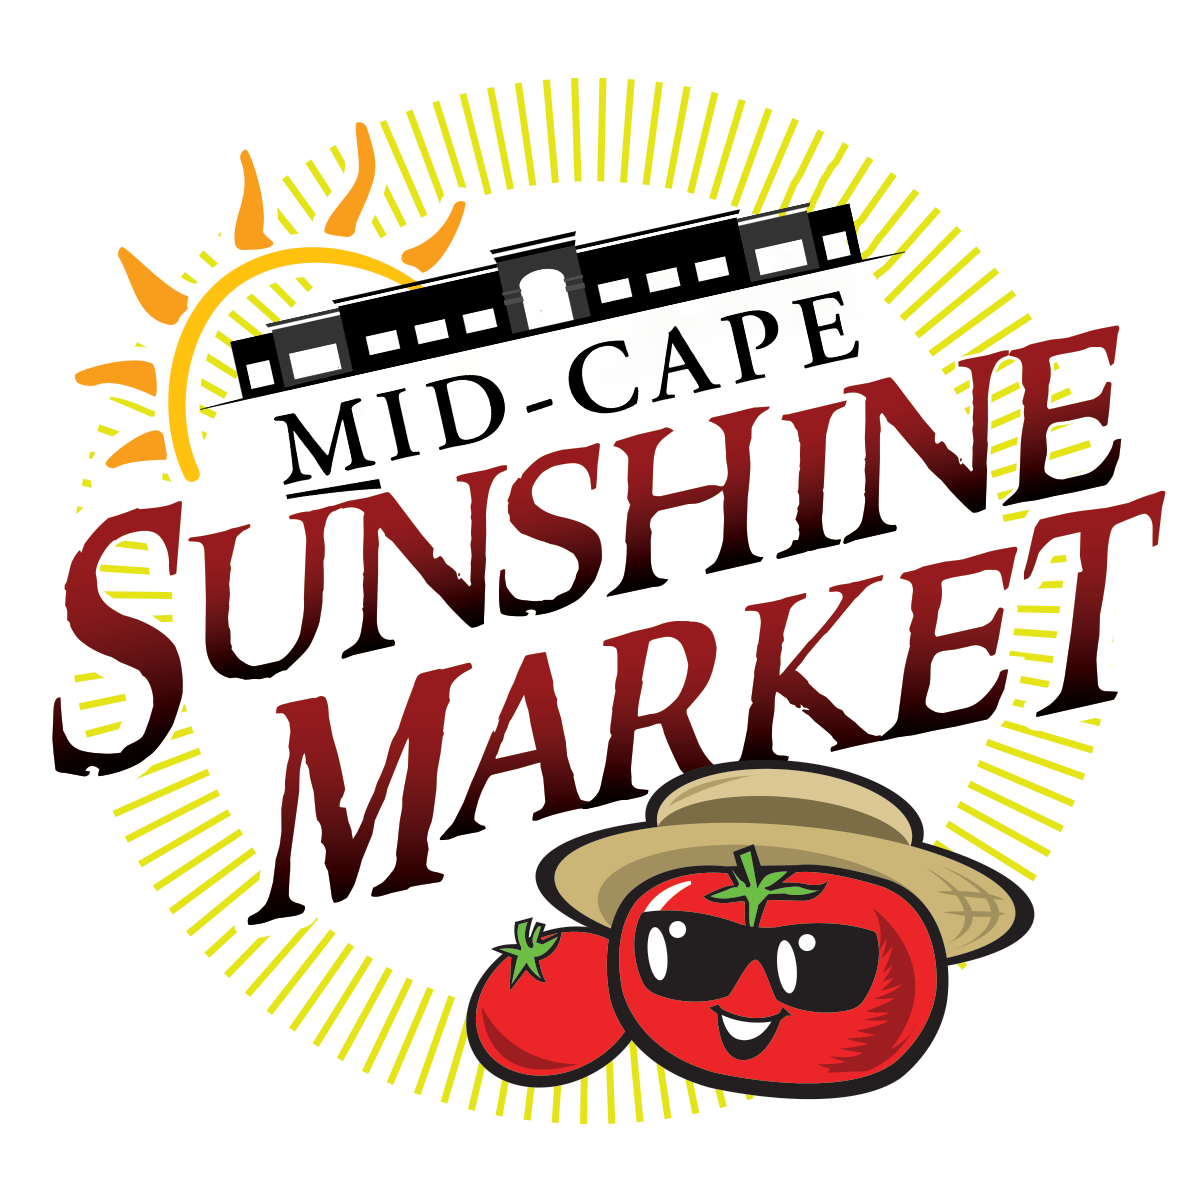 Mid-Cape Sunshine Market logo